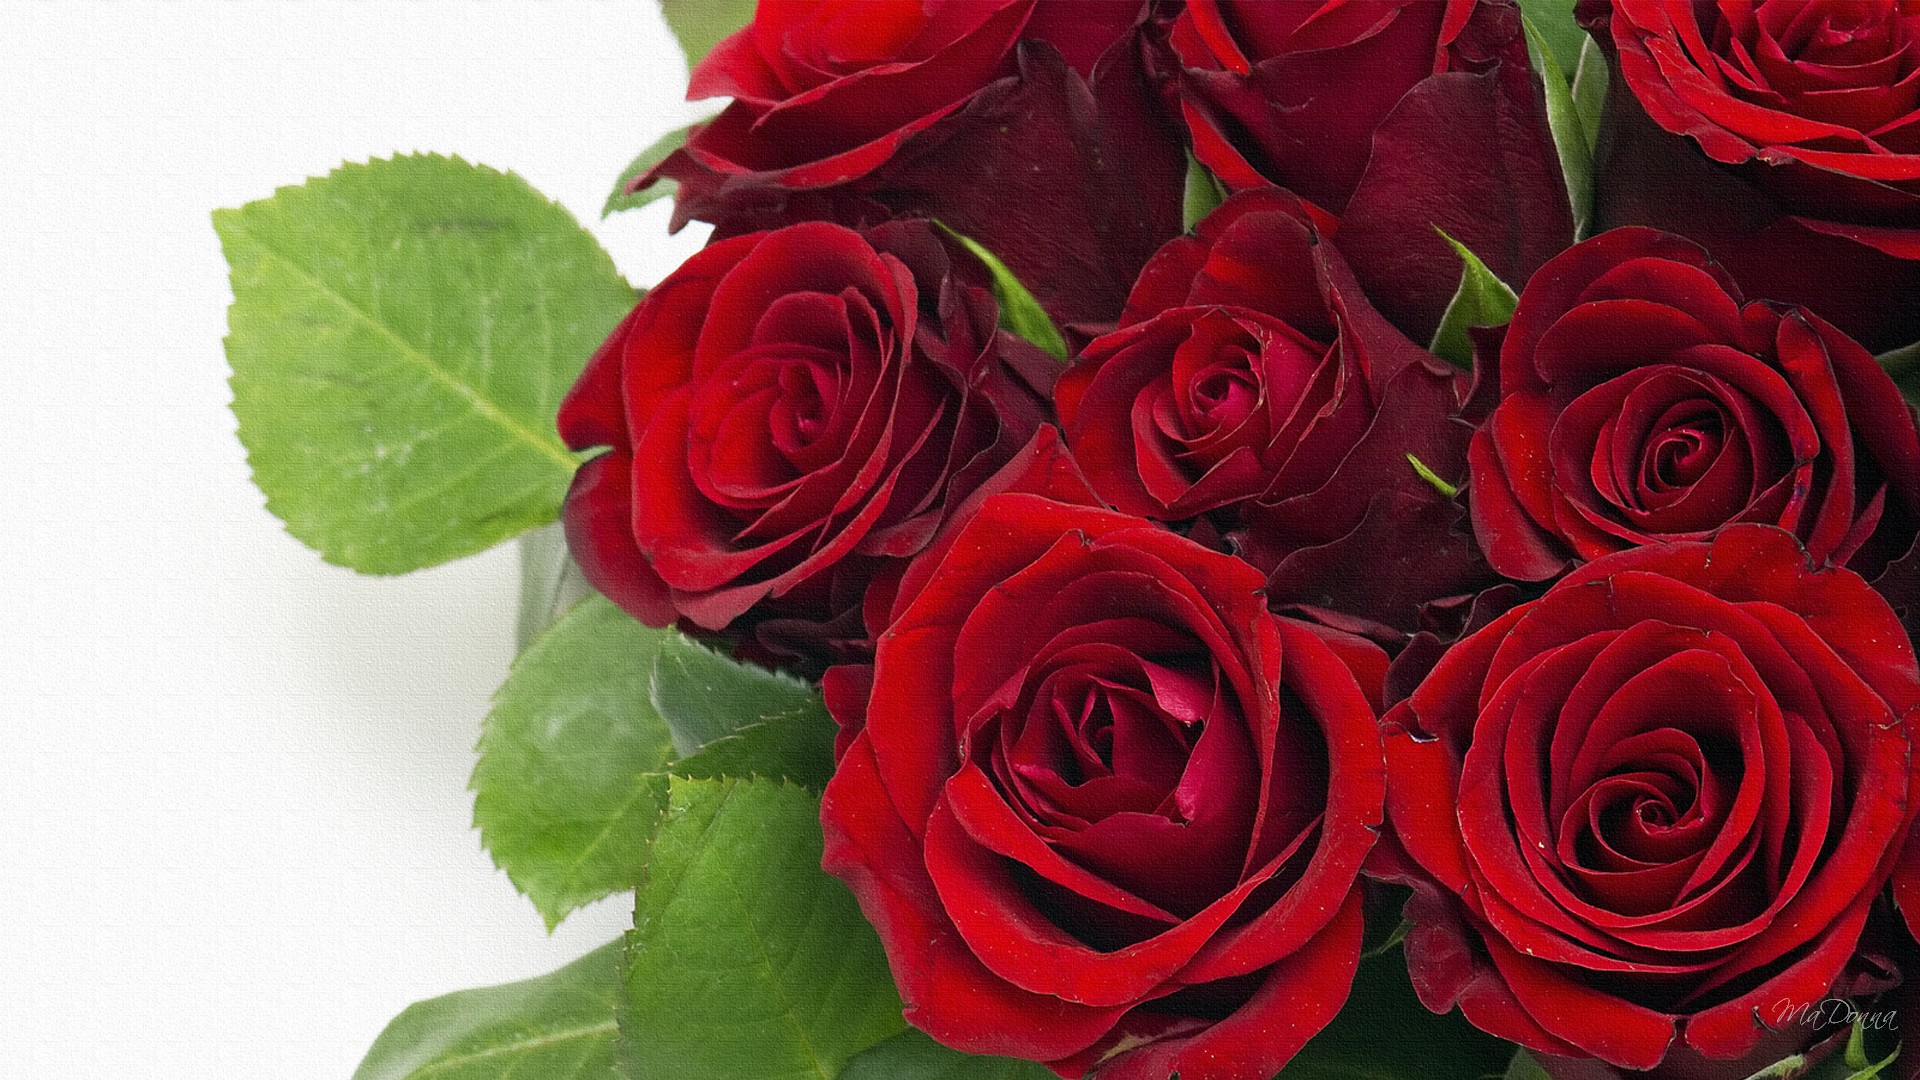 Red Rose #324658 | Full HD Widescreen wallpapers for desktop download